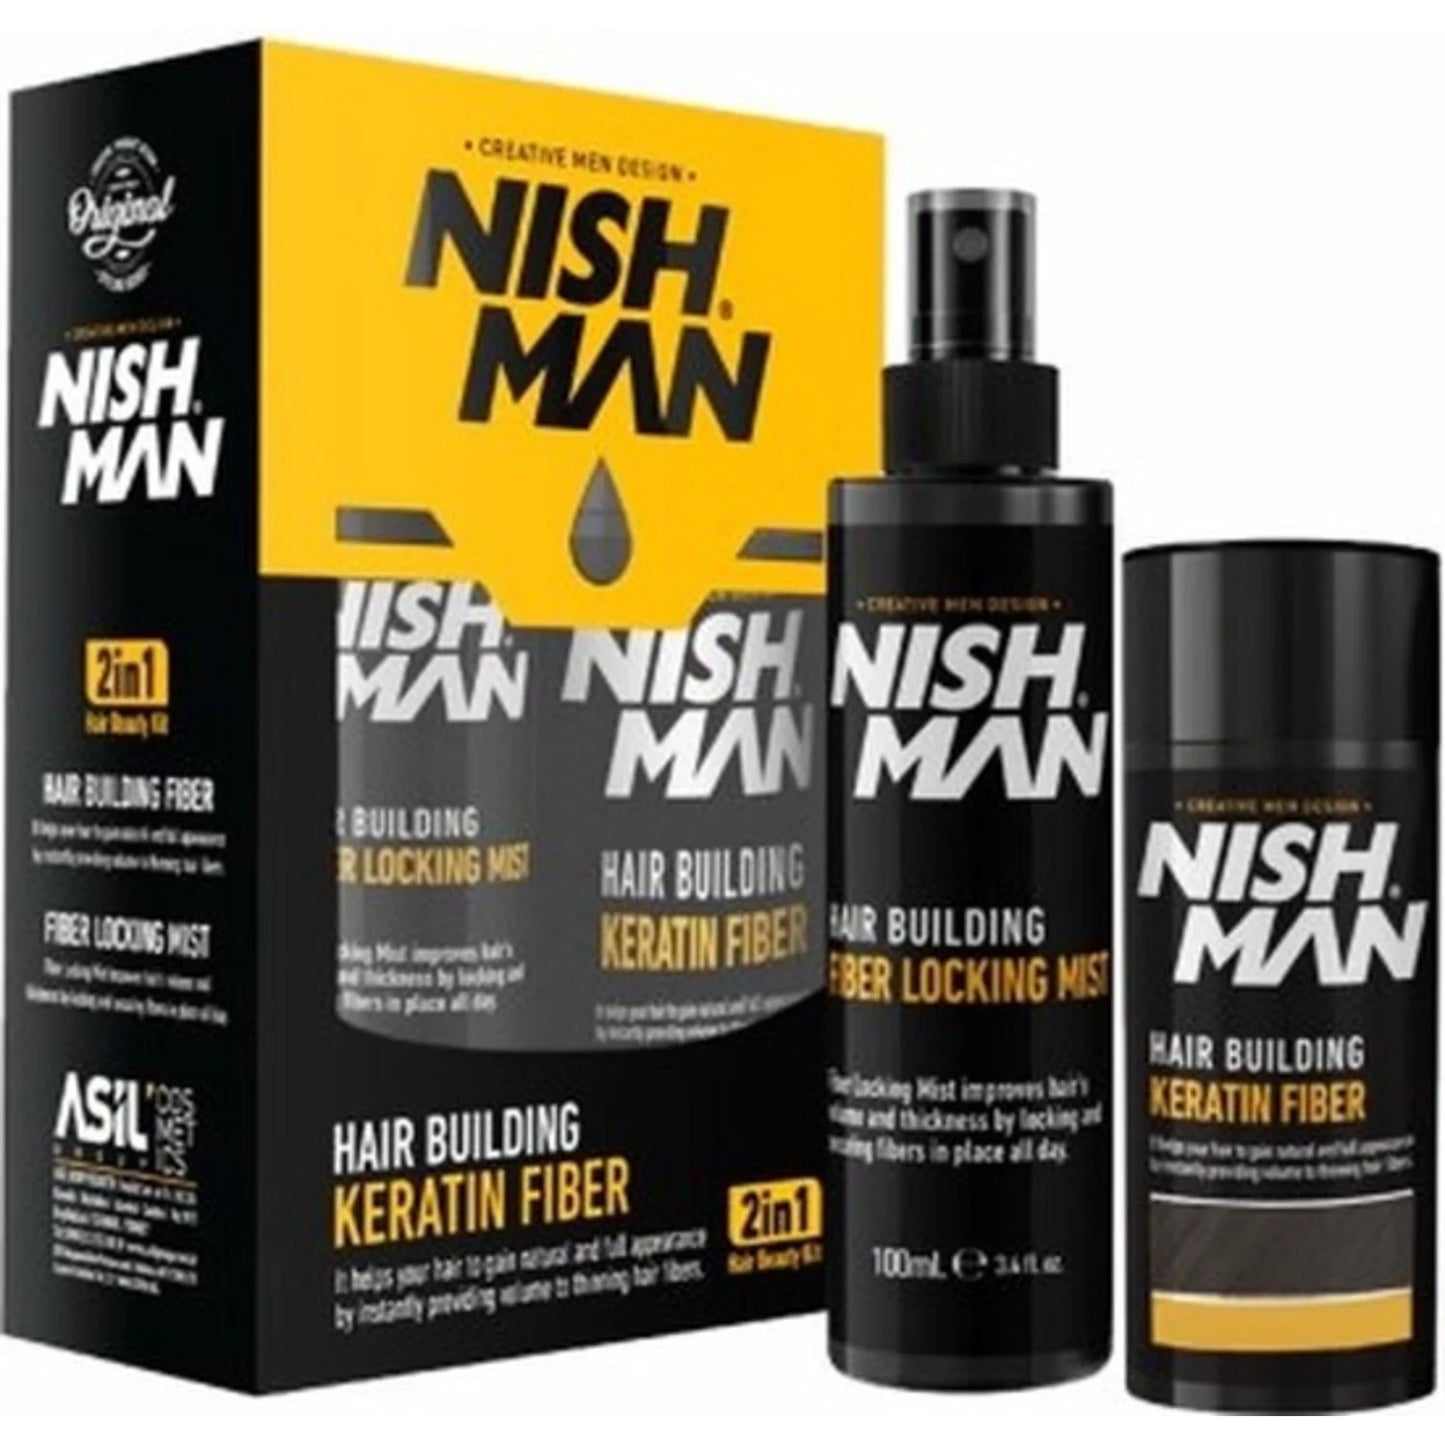 Nishman Hair Building Keratin Fiber 2 in 1 Black